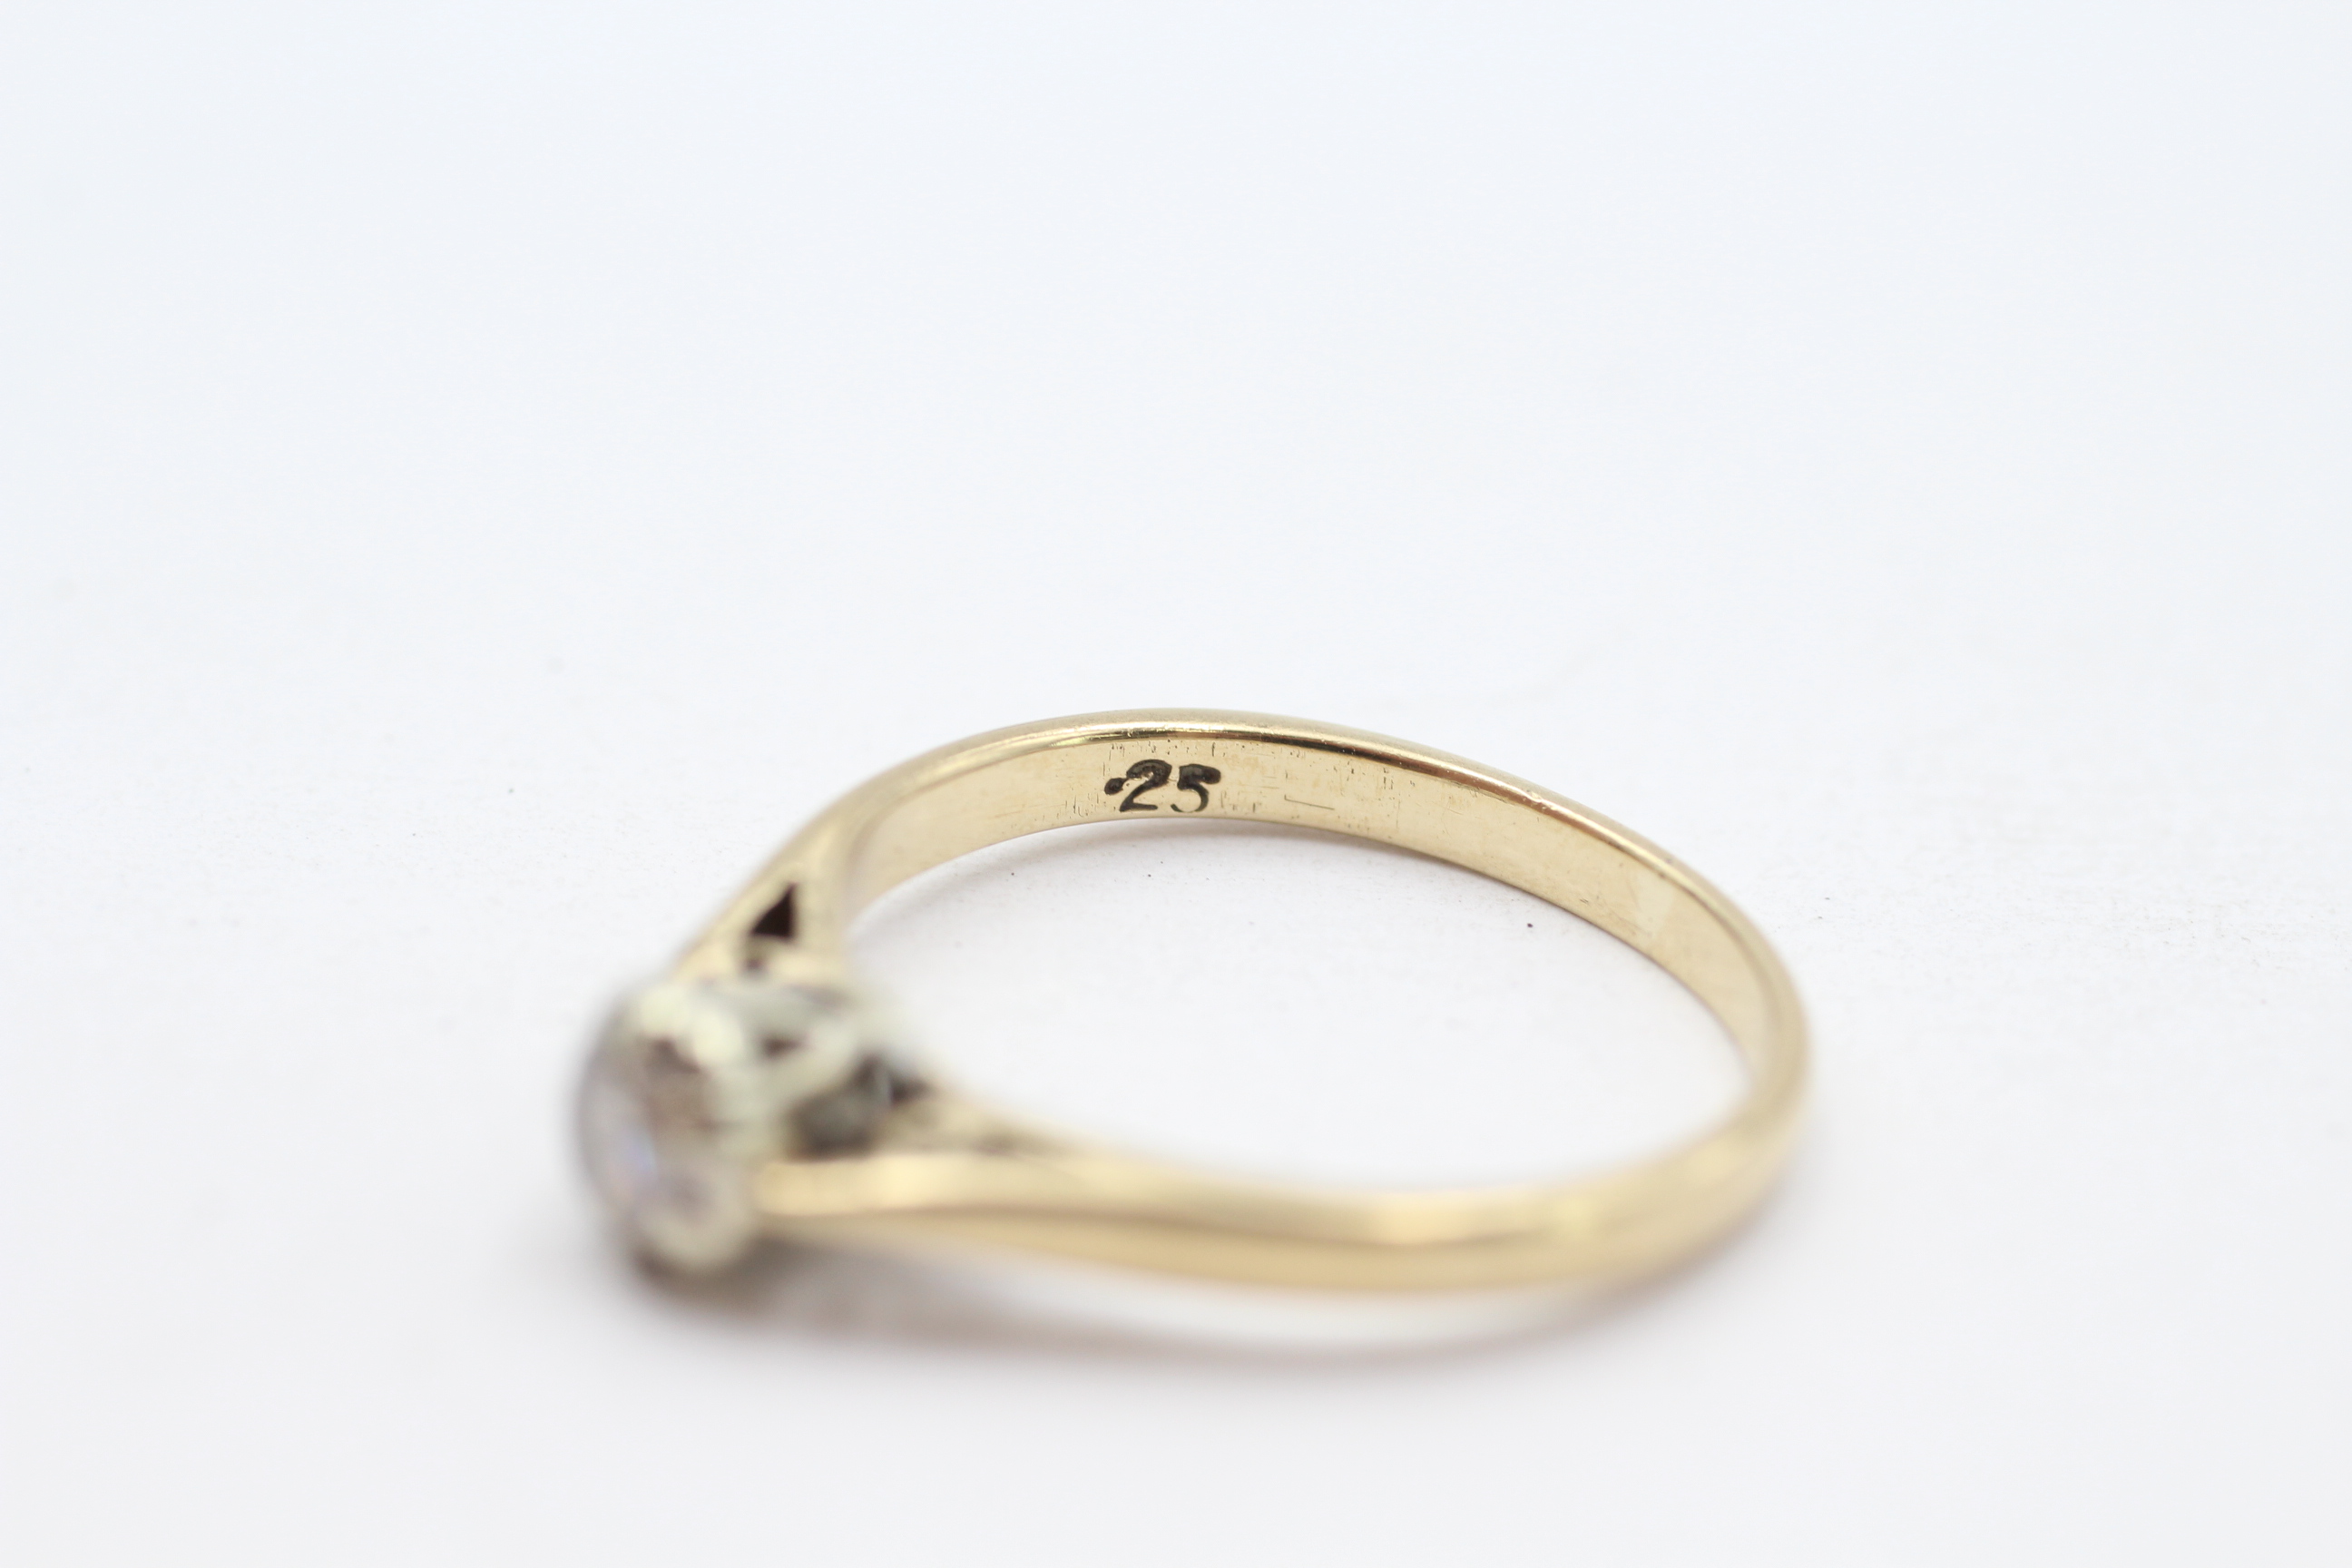 9ct gold round brilliant diamond single stone ring Size M - 2 g - Image 4 of 4